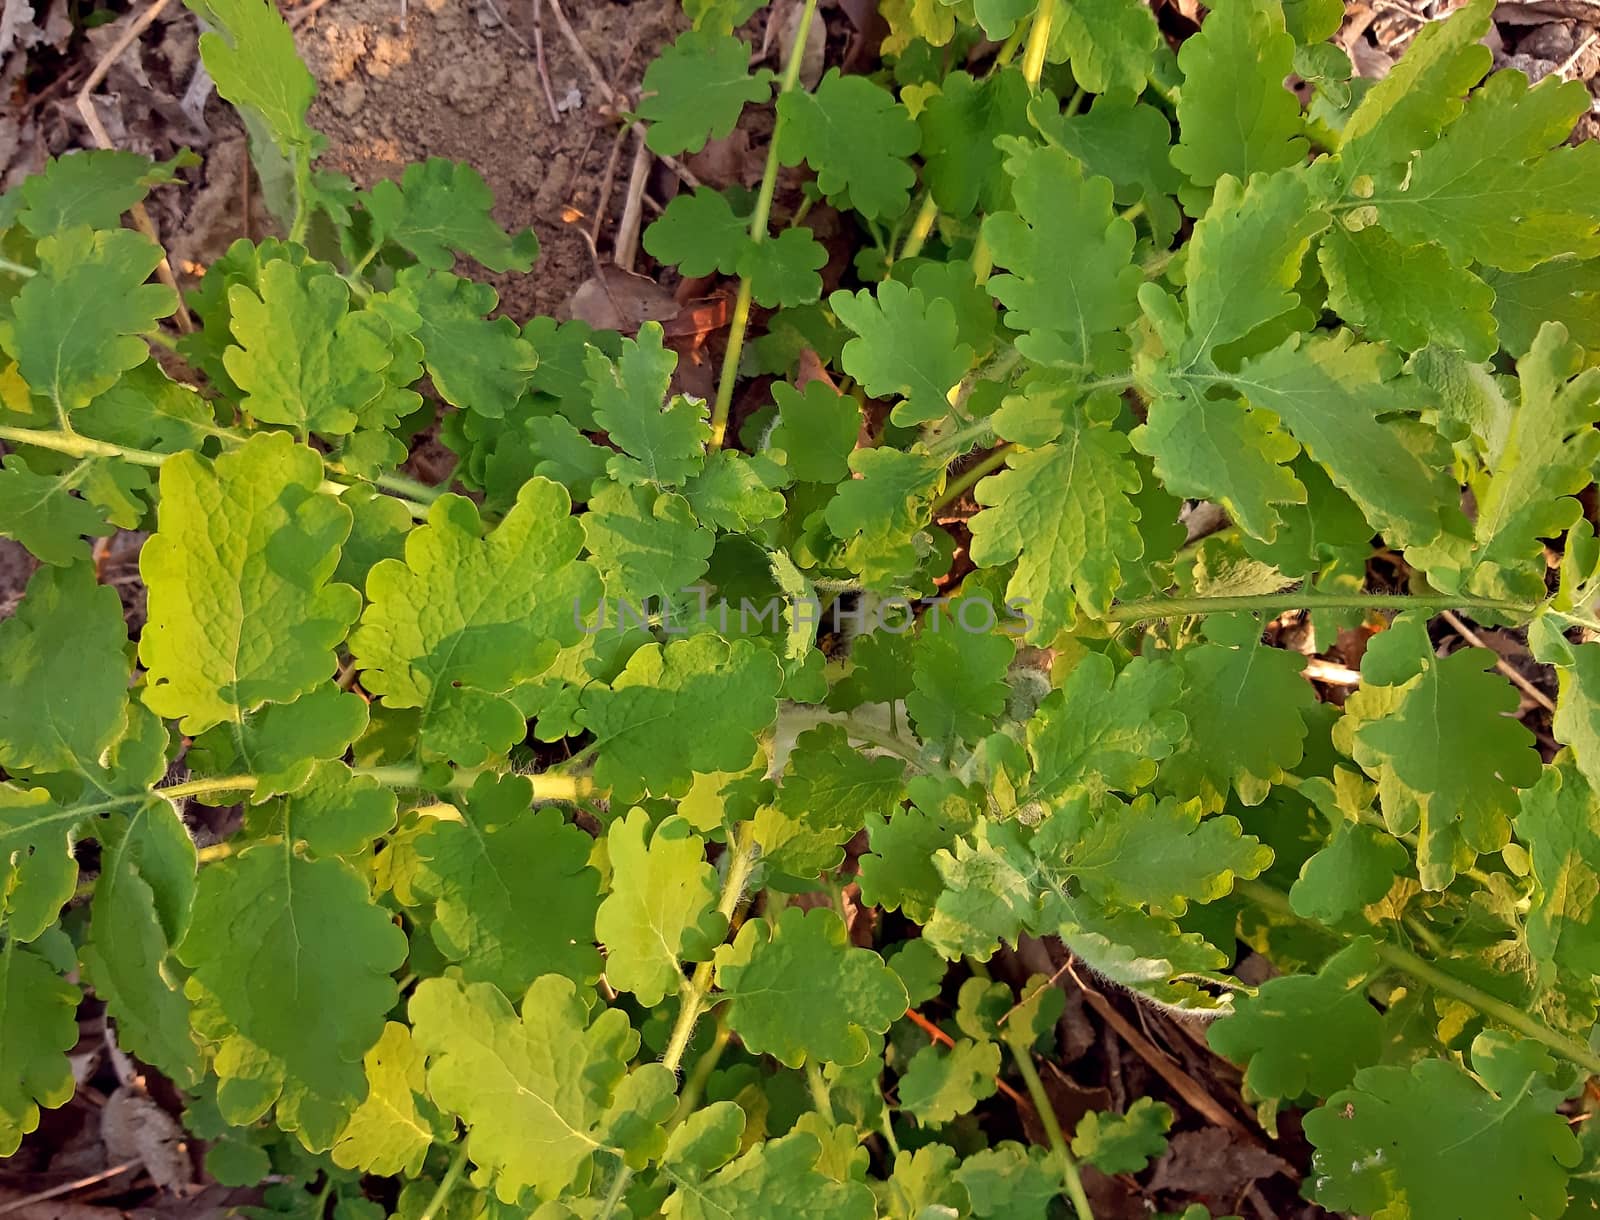 Chelidonium majus medicinal plant fresh growth in spring.